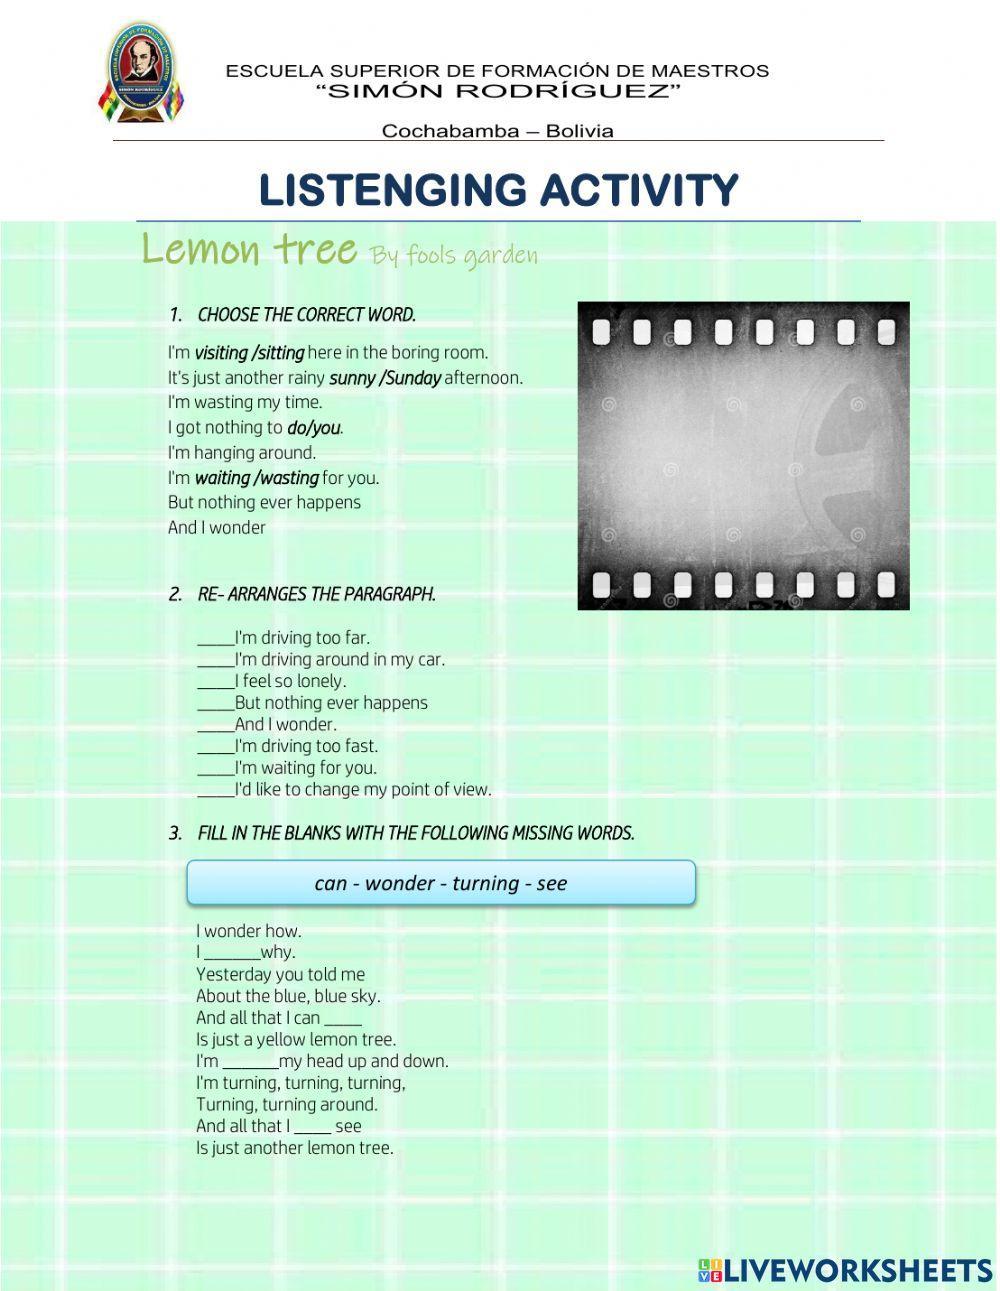 Listening activity